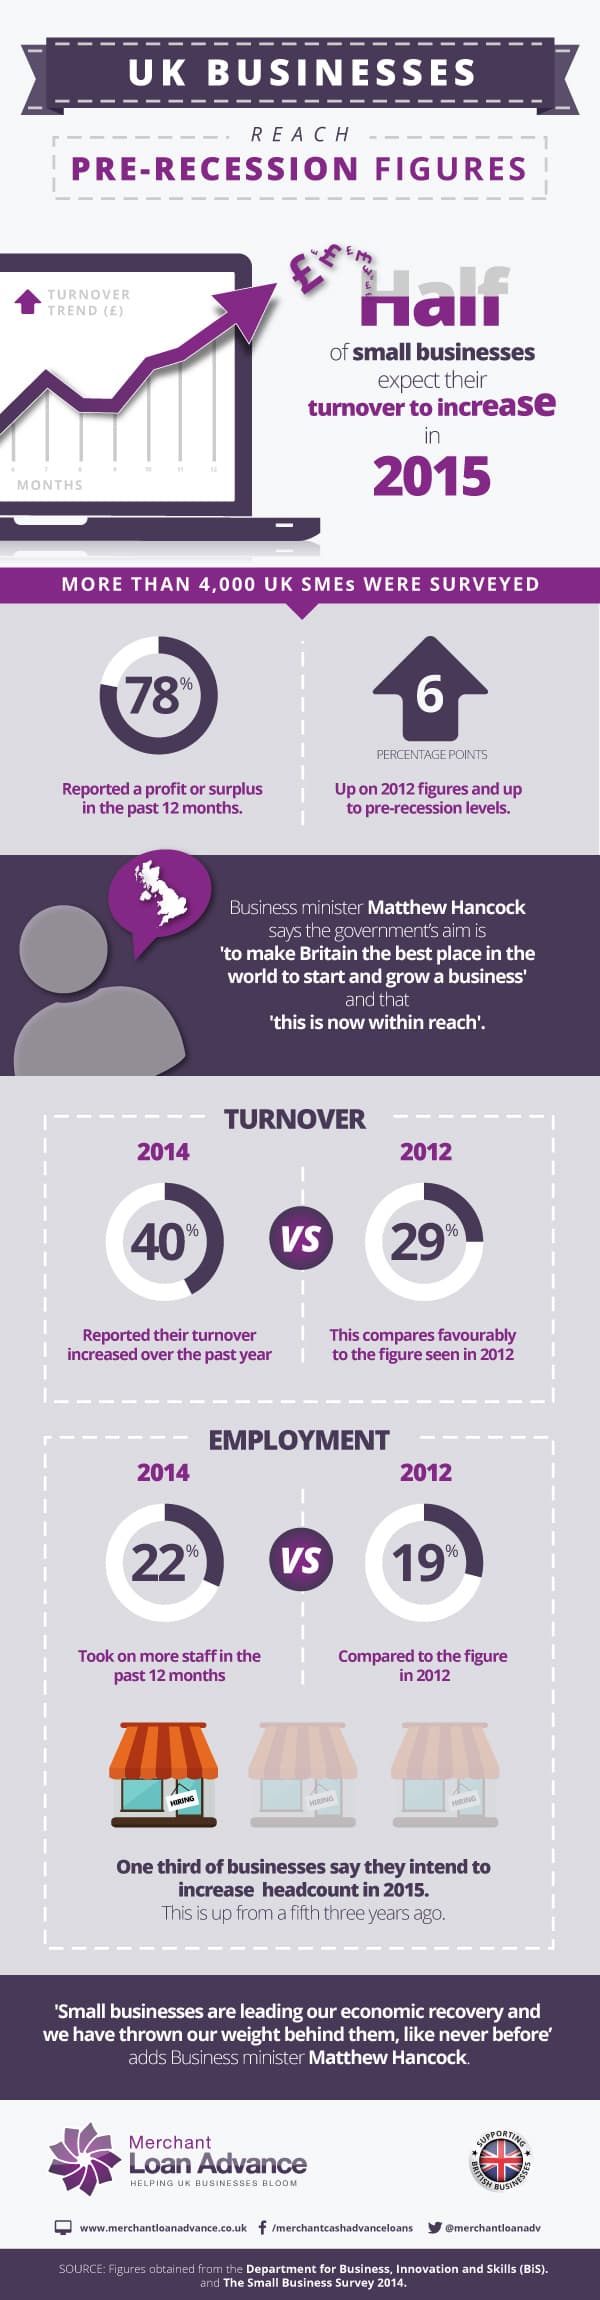 Infographic: UK Businesses Reach Pre-Recession Figures